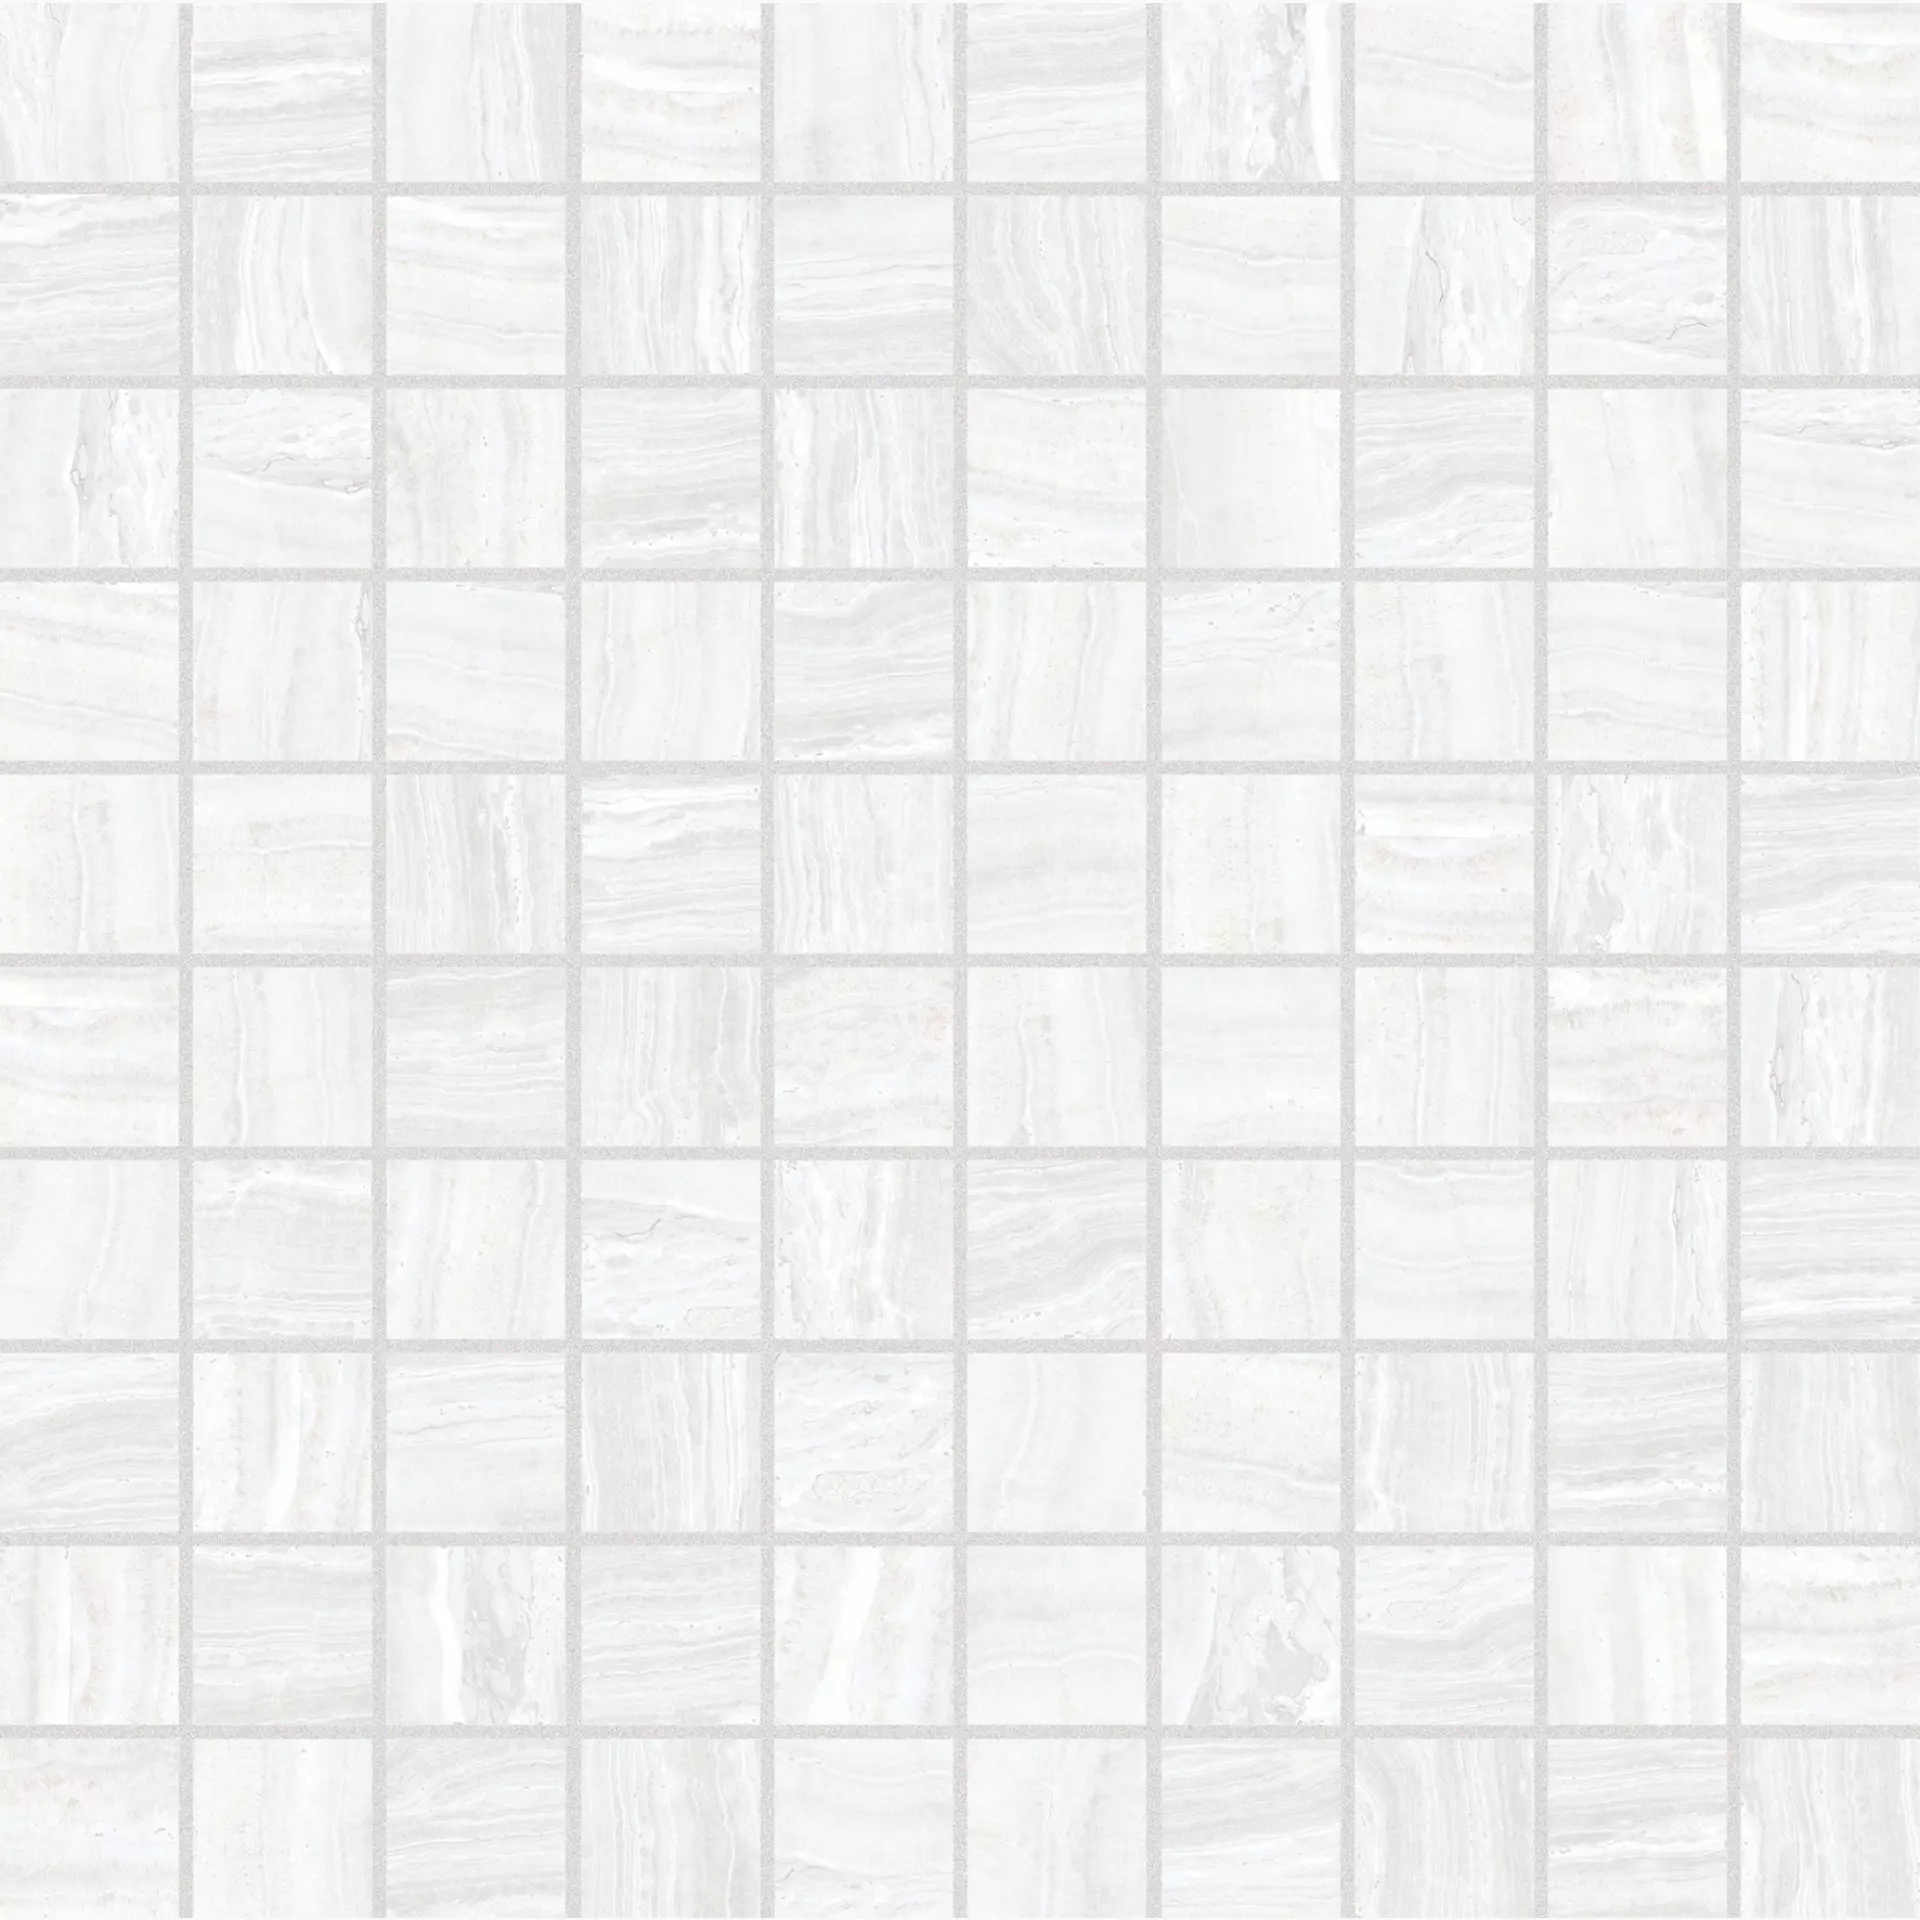 Florim Onyx Of Cerim White Lucido White 752925 glaenzend 3x3cm Mosaik 3x3 rektifiziert 9mm